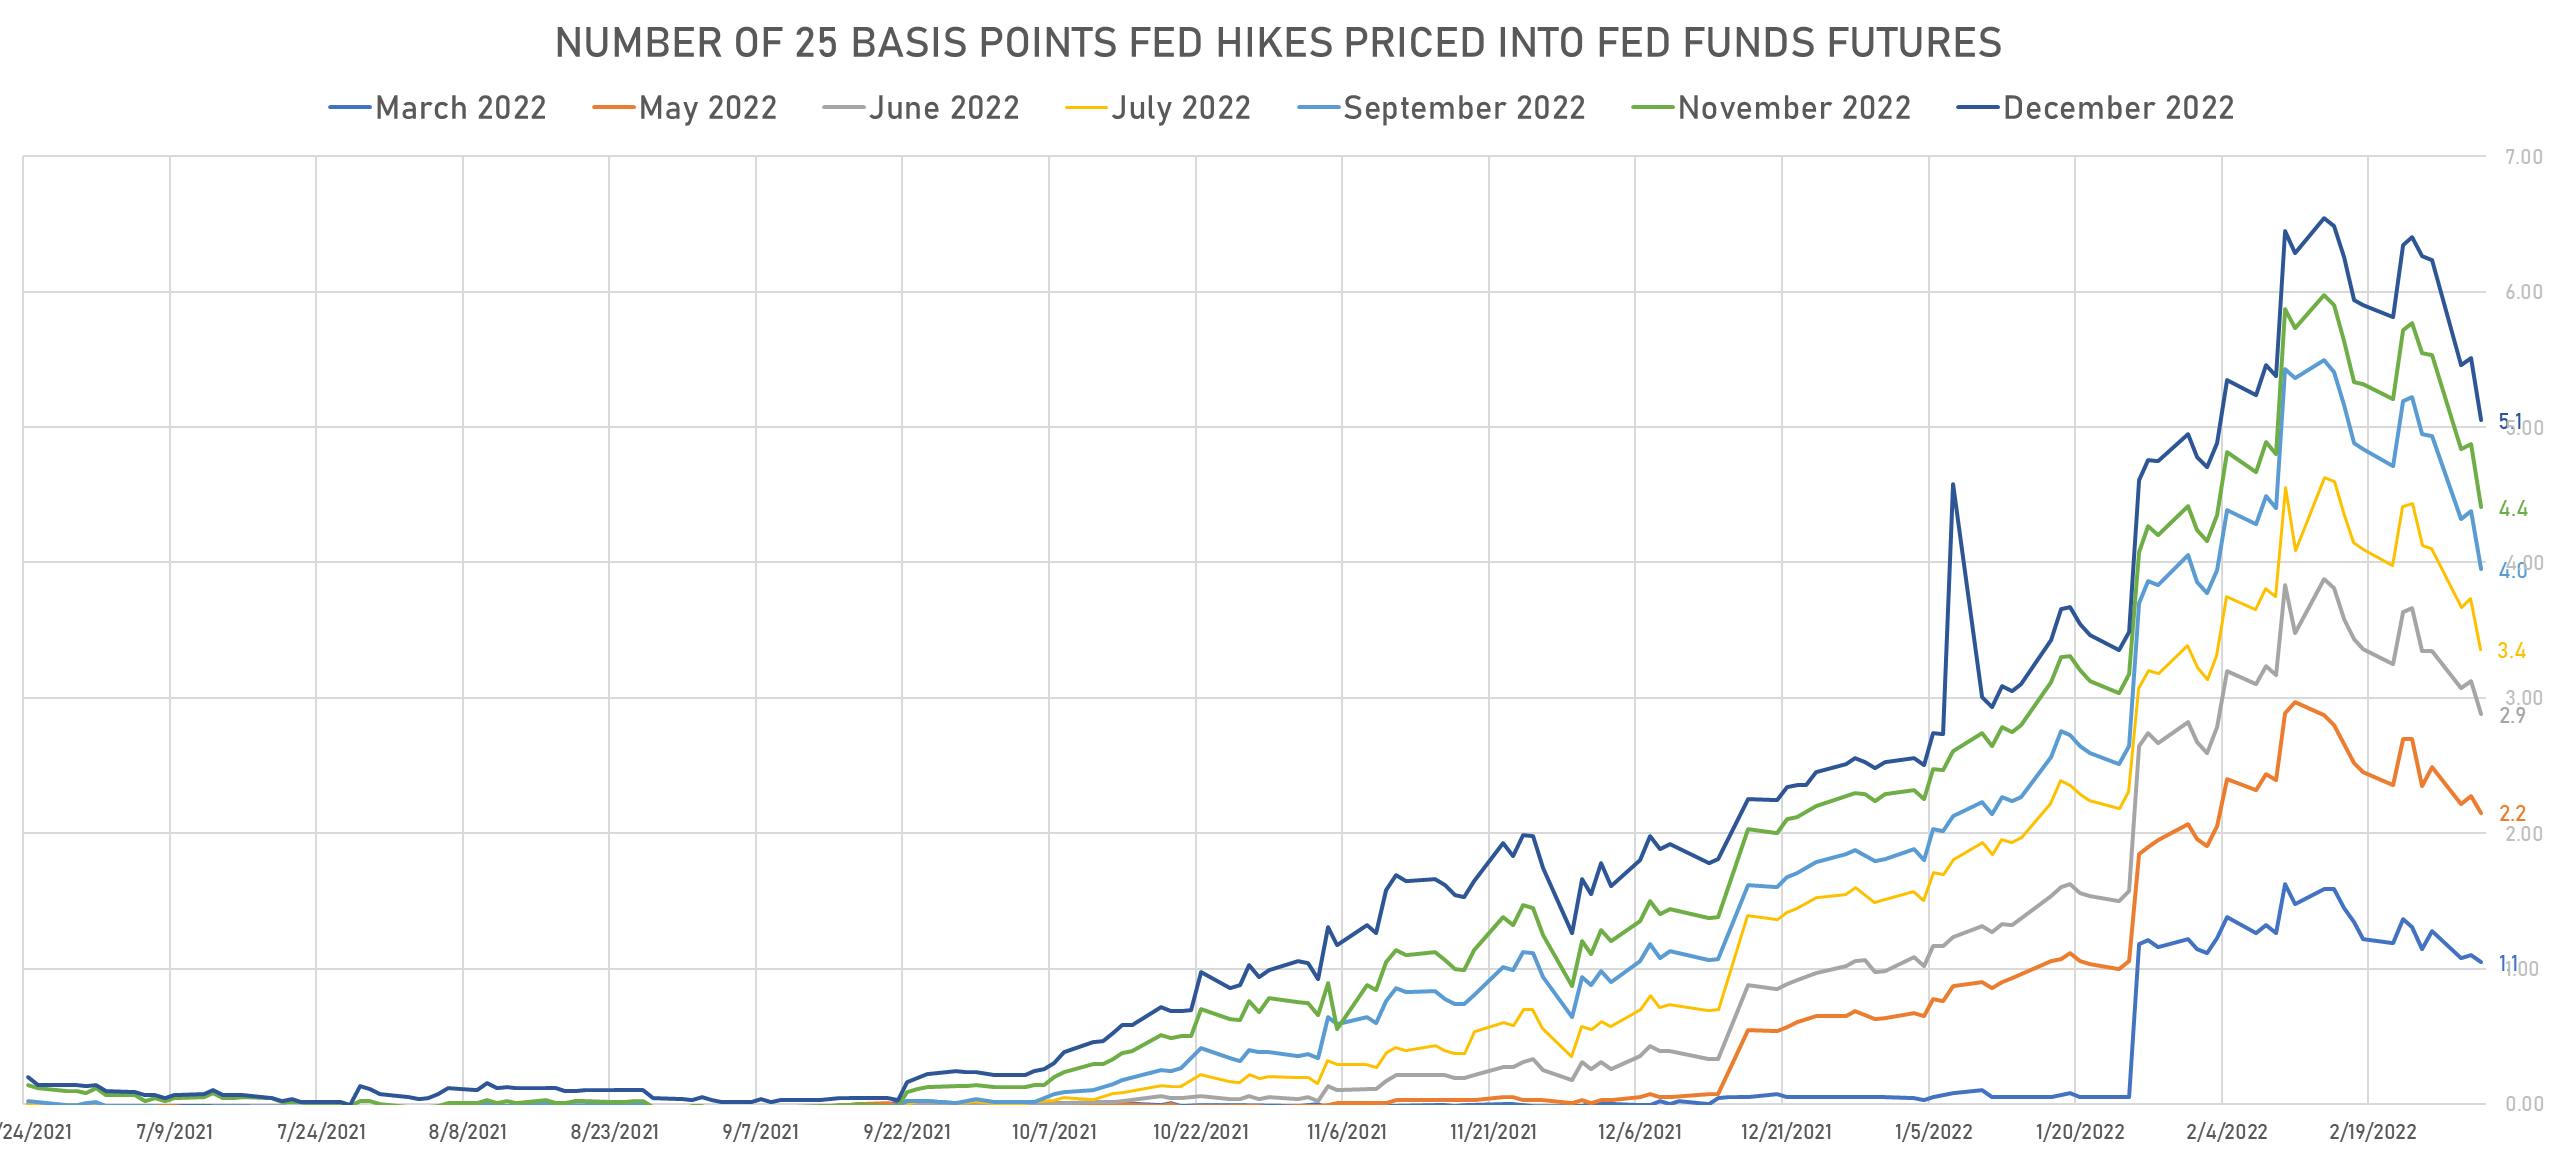 Fed Hikes 2022 | Sources: phipost.com, Refinitiv data